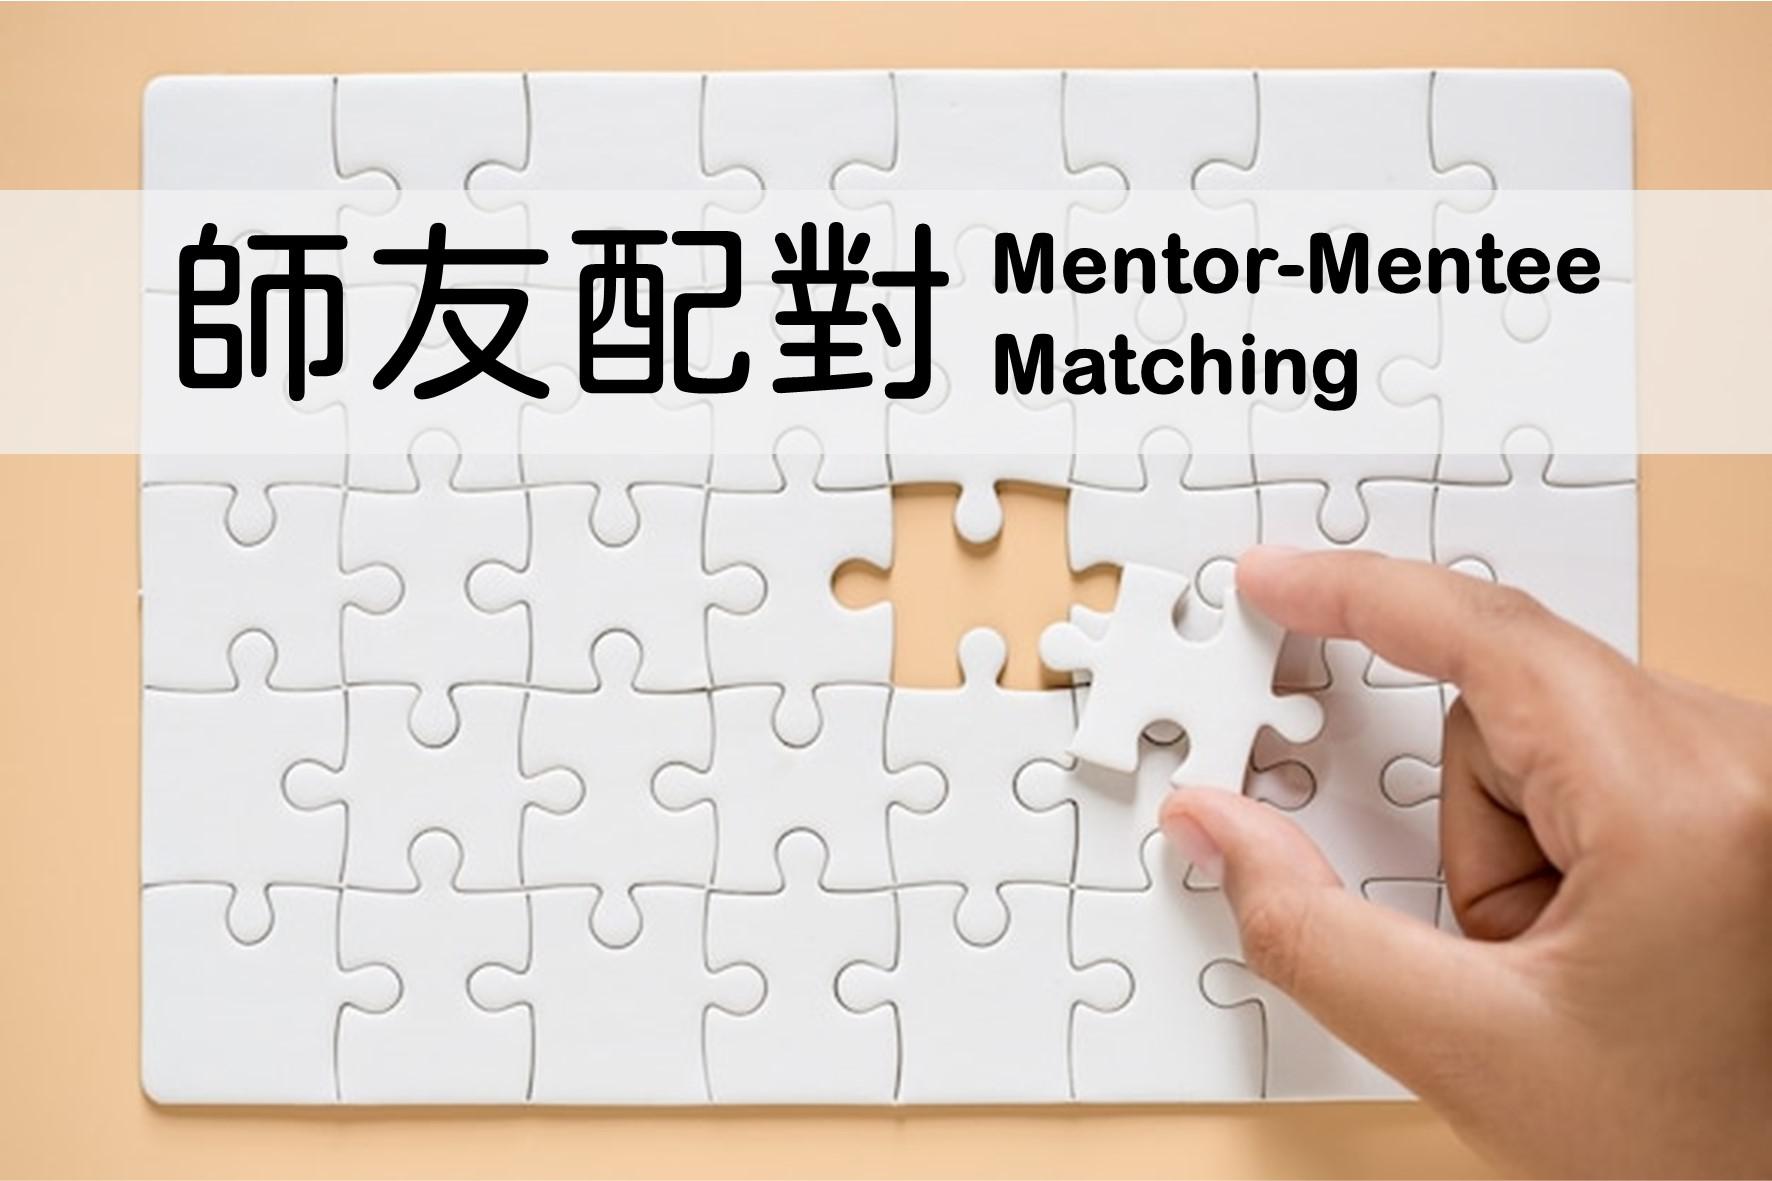 Mentor-Mentee Matching